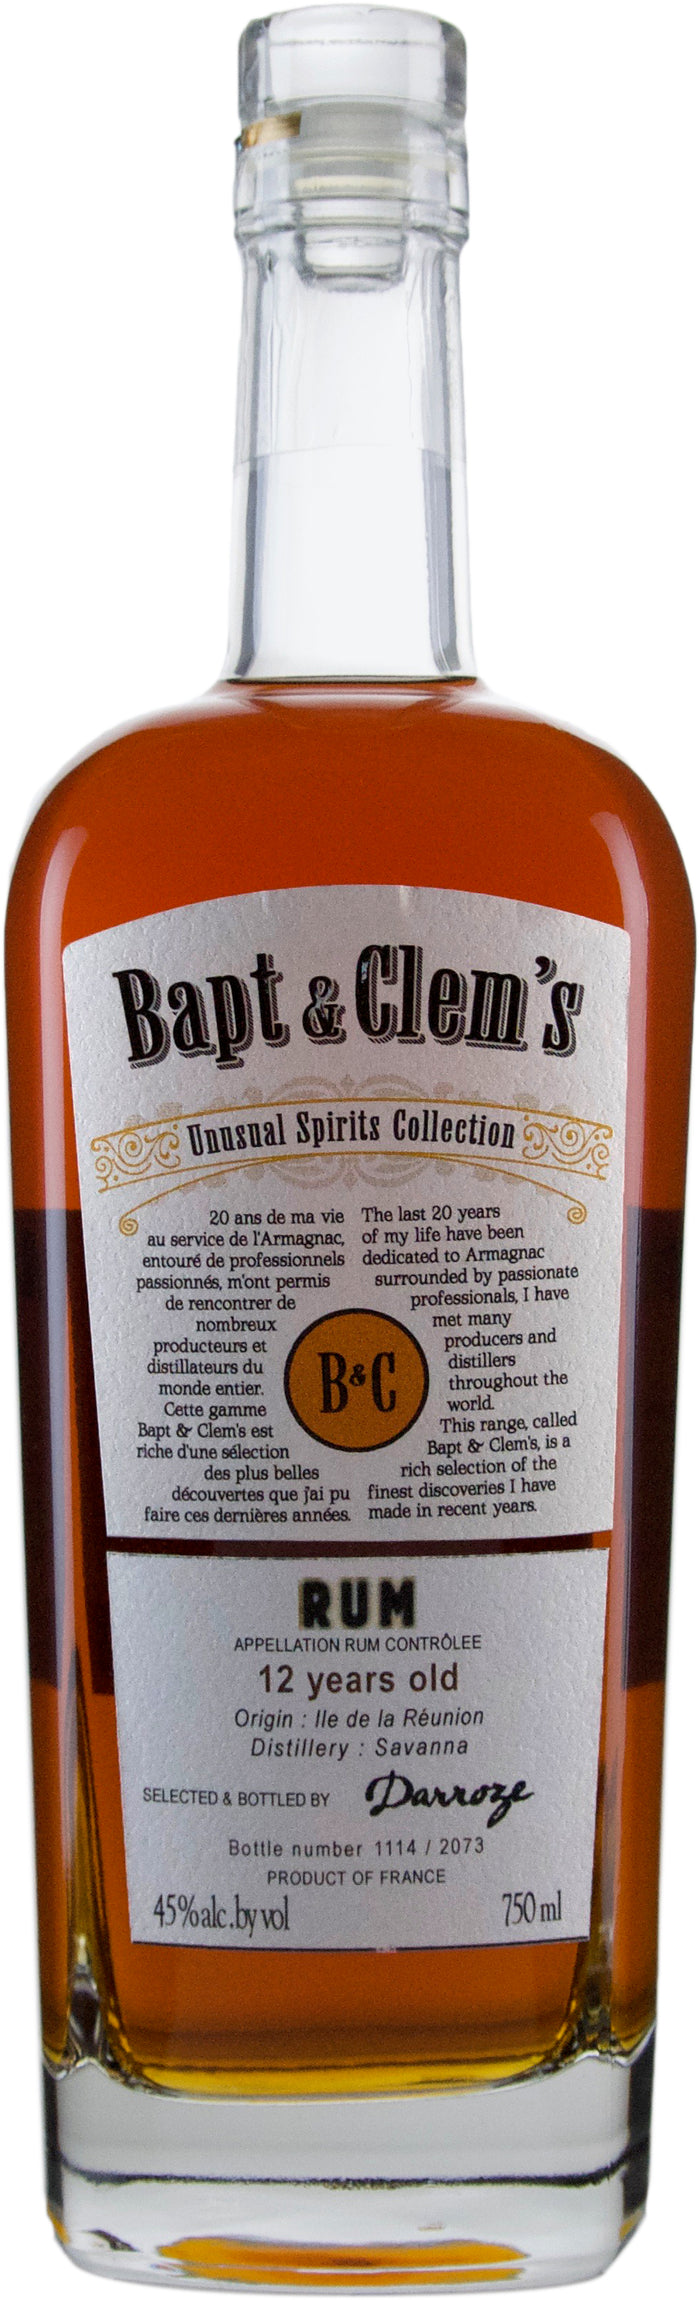 Bapt & Clem's 12 Year Old Reunion From Savanna Distillery Island Rhum